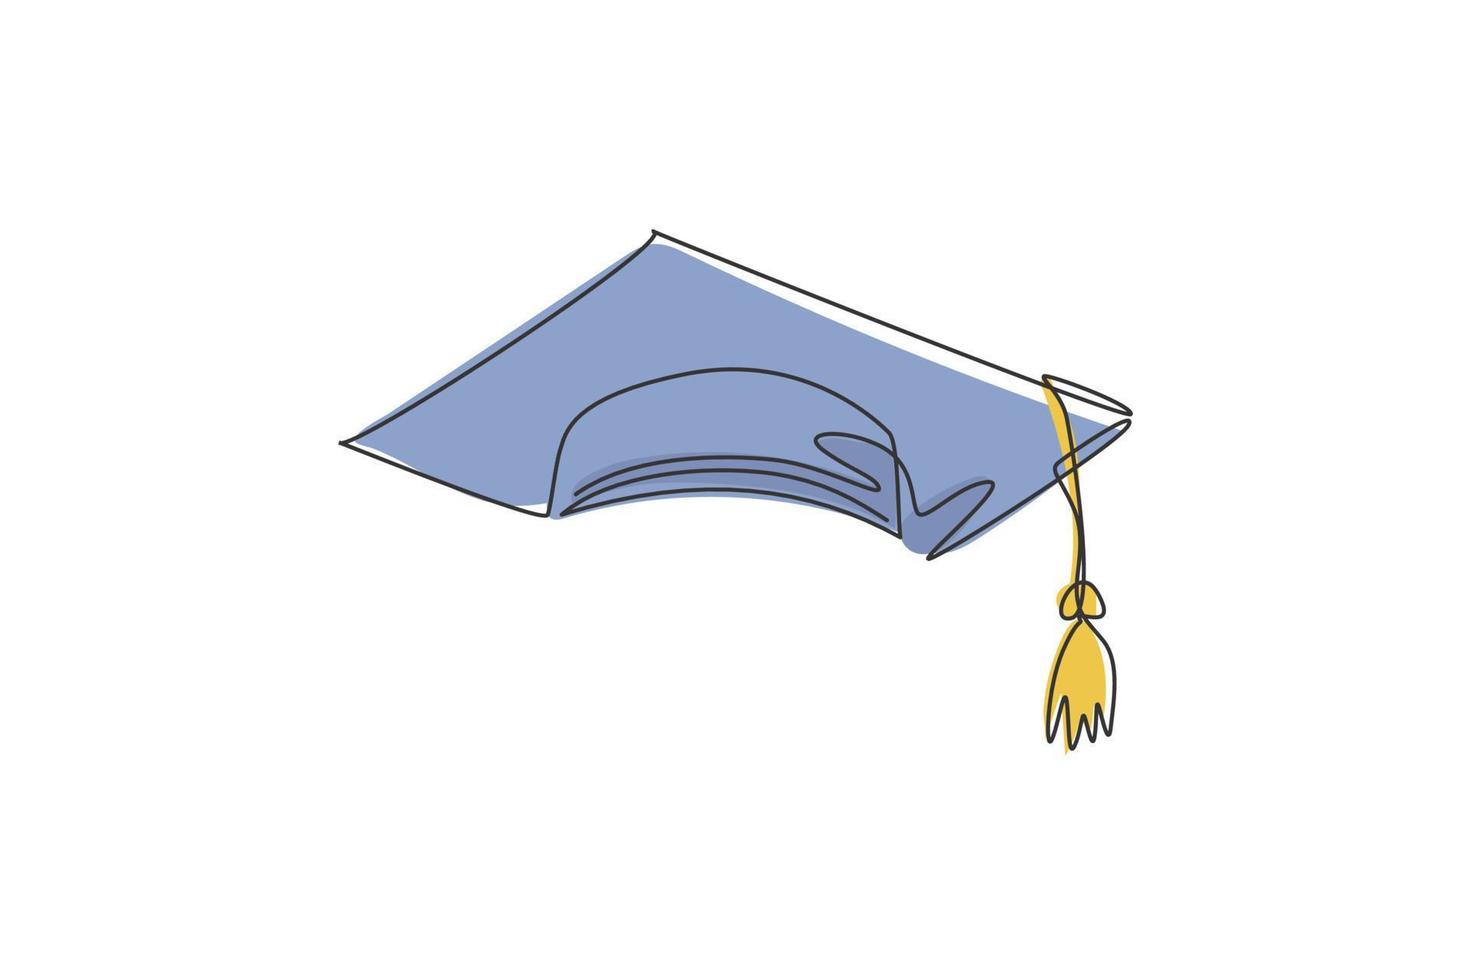 Graduation cap. Single continuous line university graduation hat graphic icon. Simple one line doodle for education concept. Isolated vector illustration minimalist design on white background